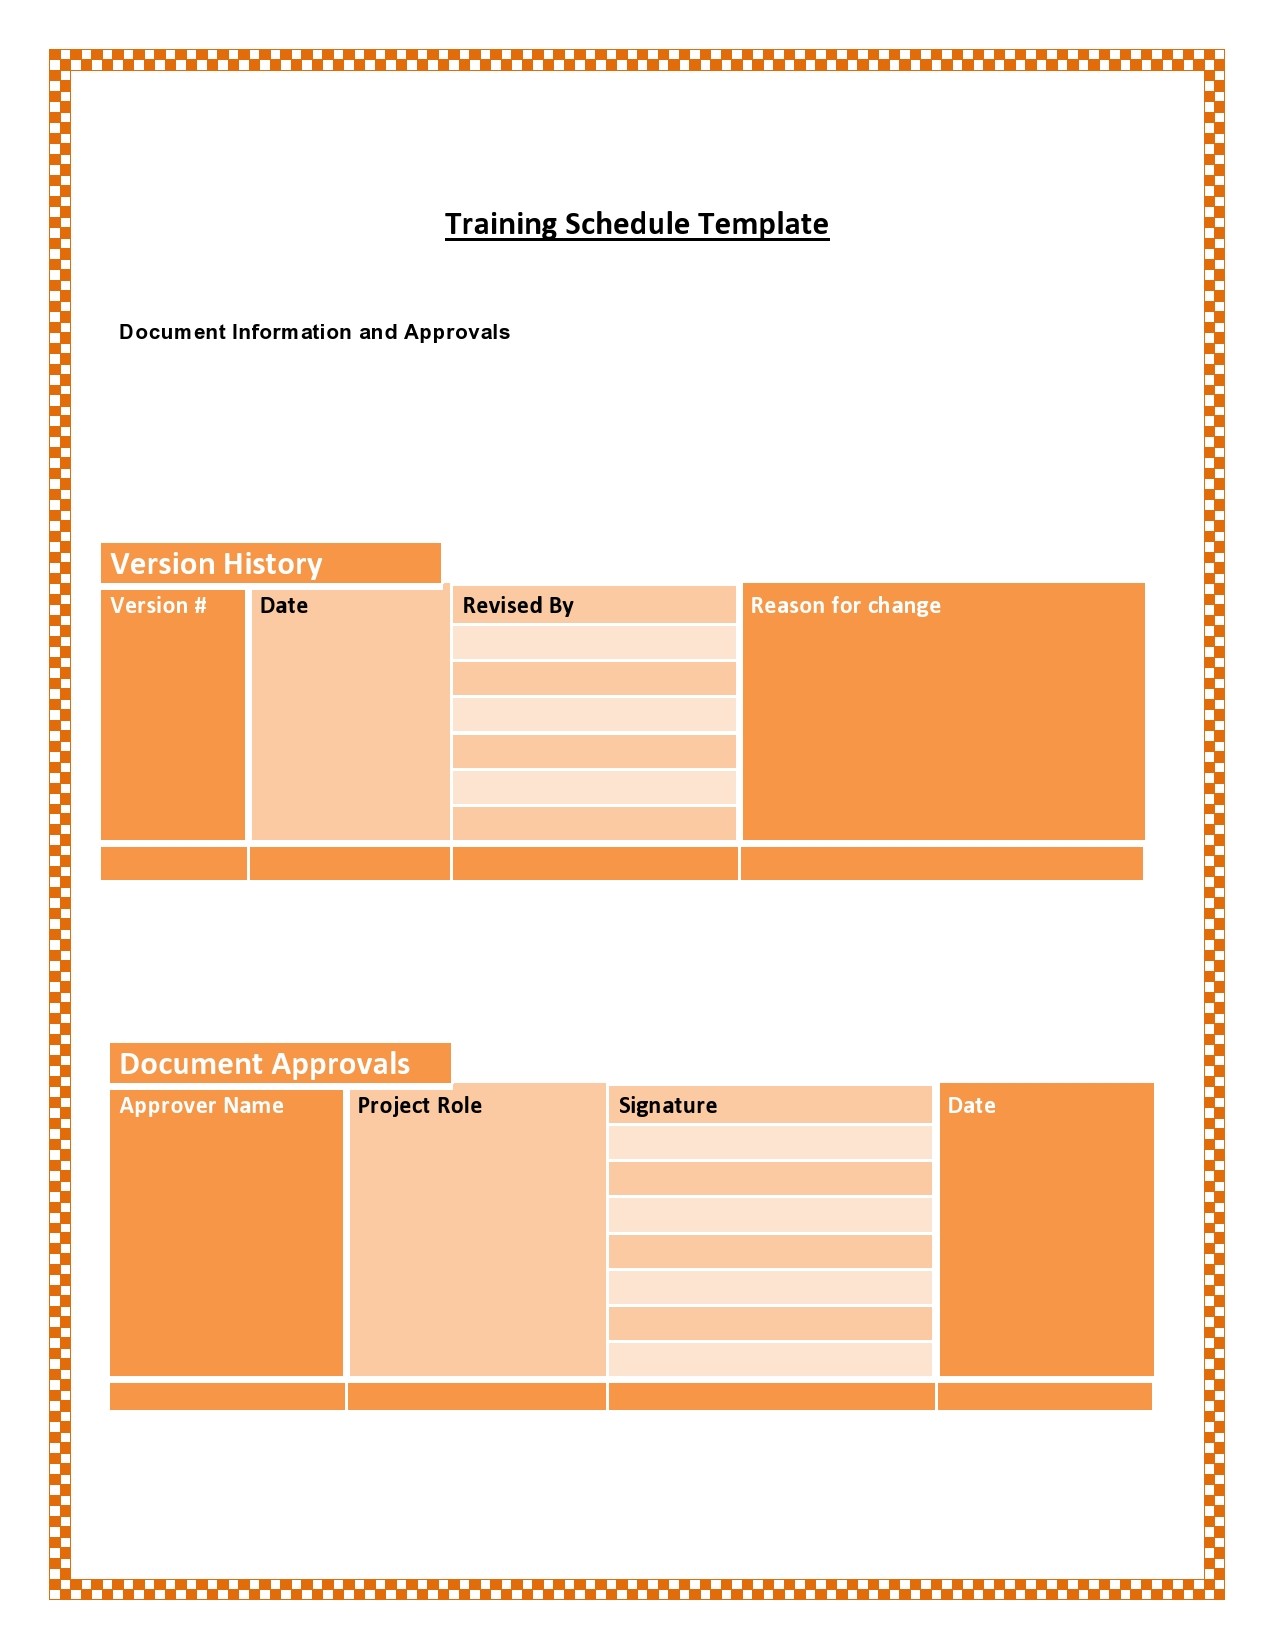 43 Employee Training Plan Templates (Word & Excel) ᐅ TemplateLab